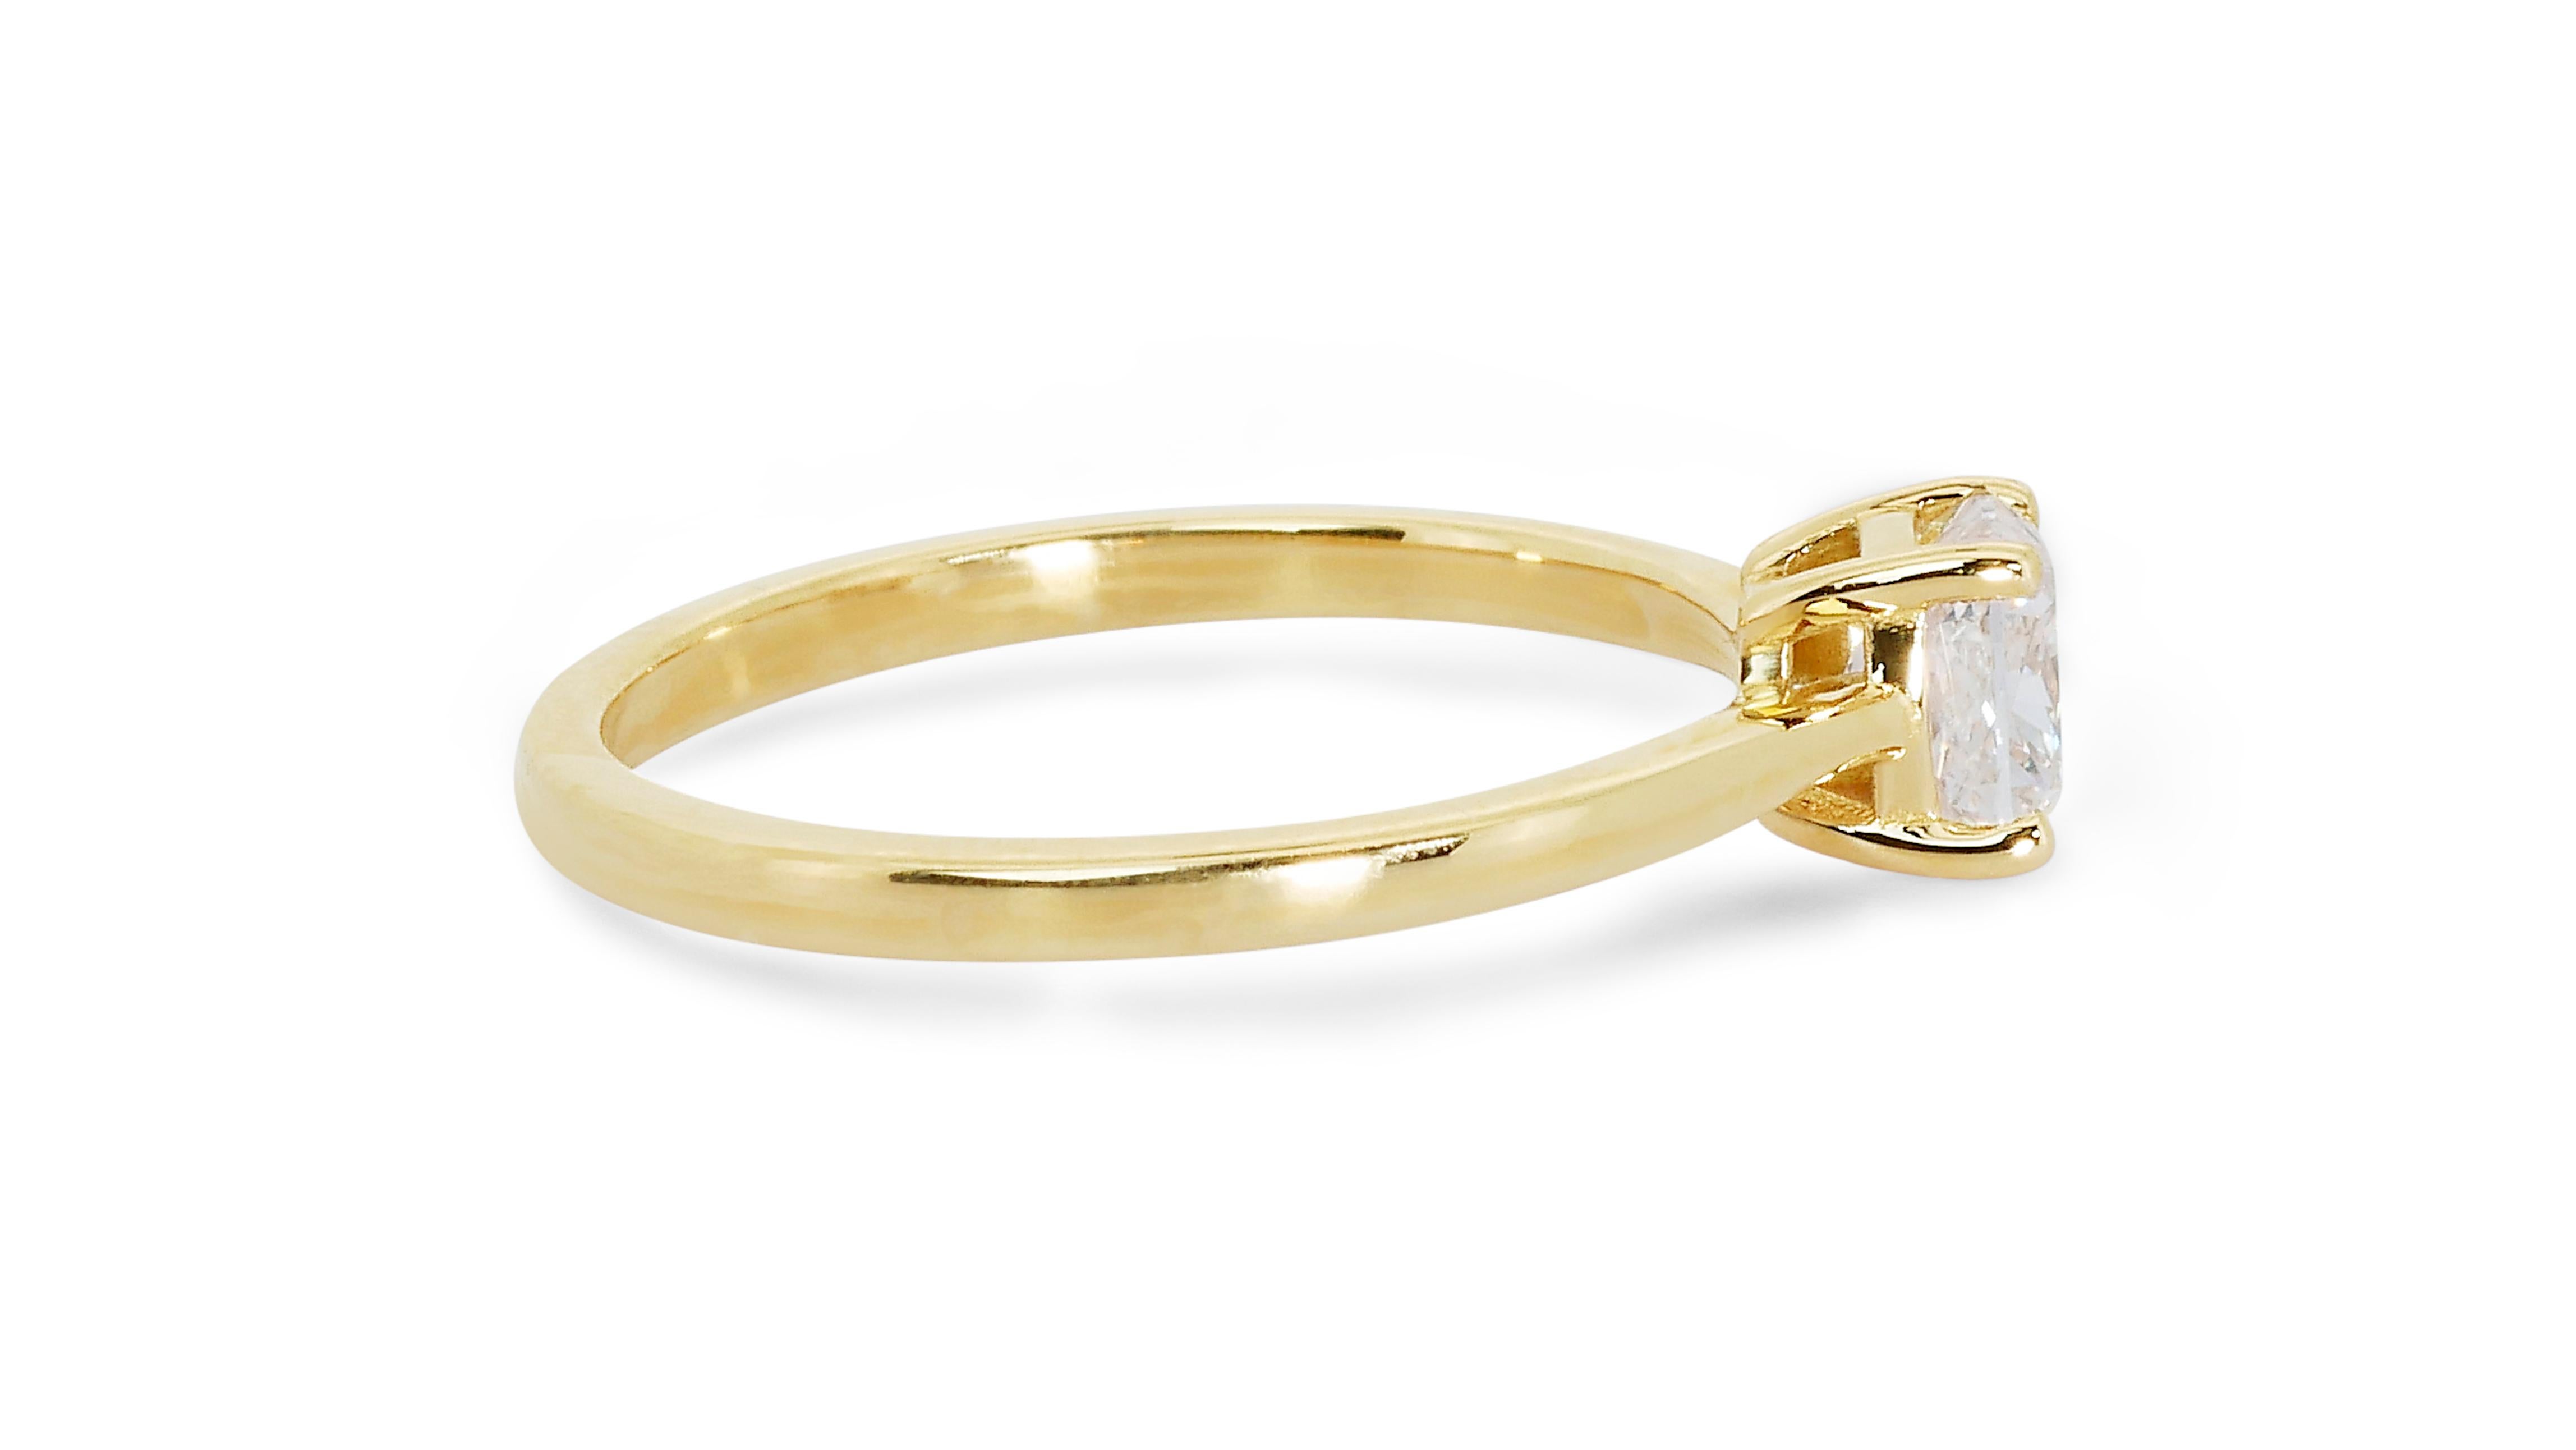 Marvelous 18k Yellow Gold Solitaire Ring w/ 0.7 Carat Natural Diamonds IGI Cert For Sale 1